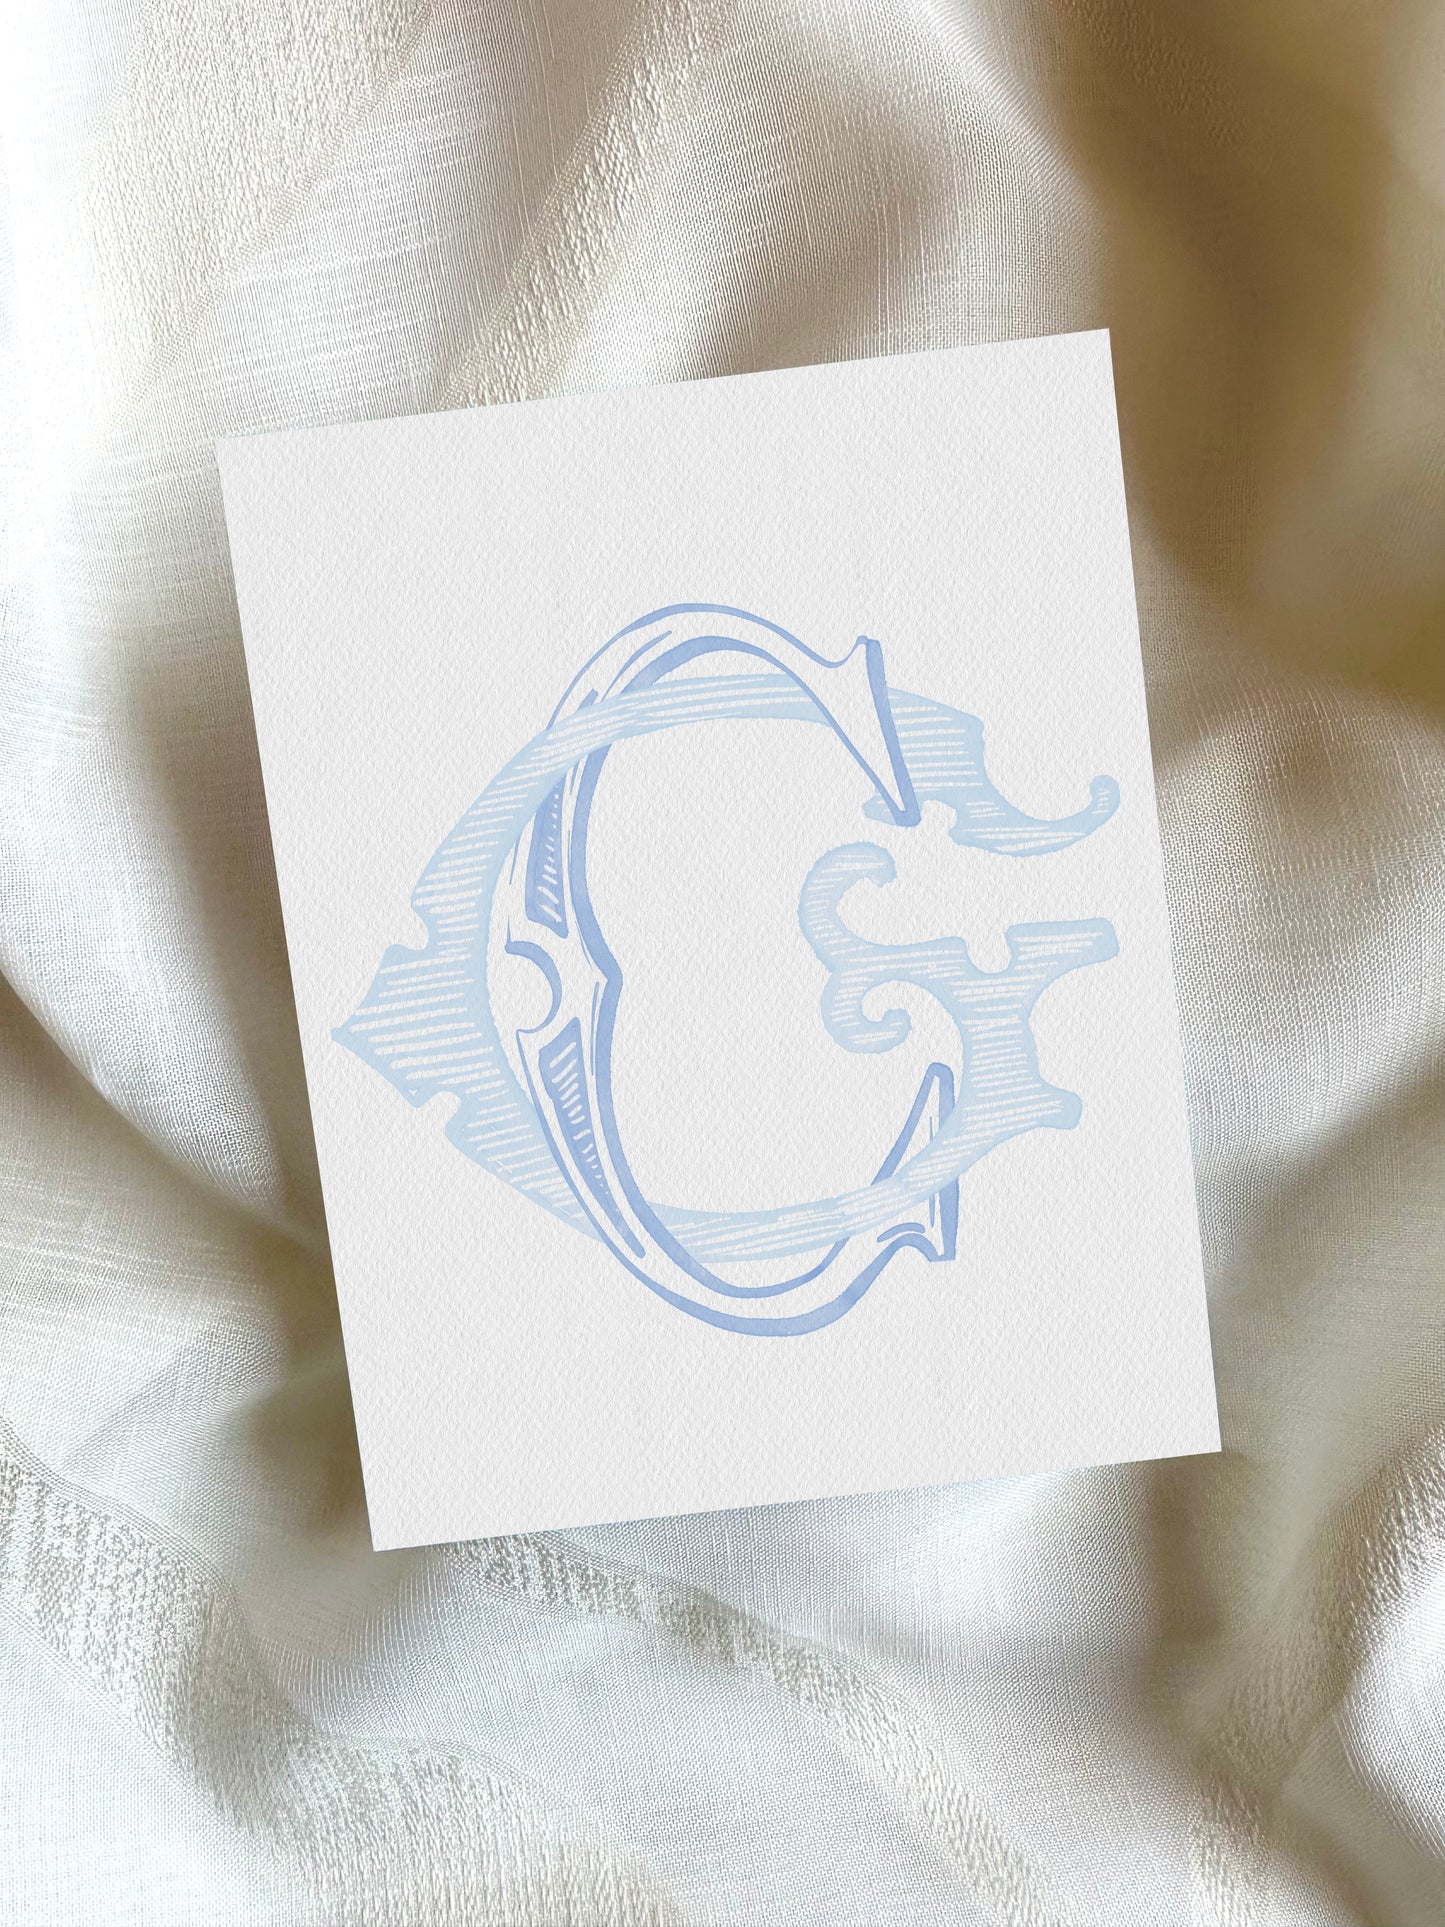 2 Letter Monogram with Letters CG GC | Digital Download - Wedding Monogram SVG, Personal Logo, Wedding Logo for Wedding Invitations The Wedding Crest Lab